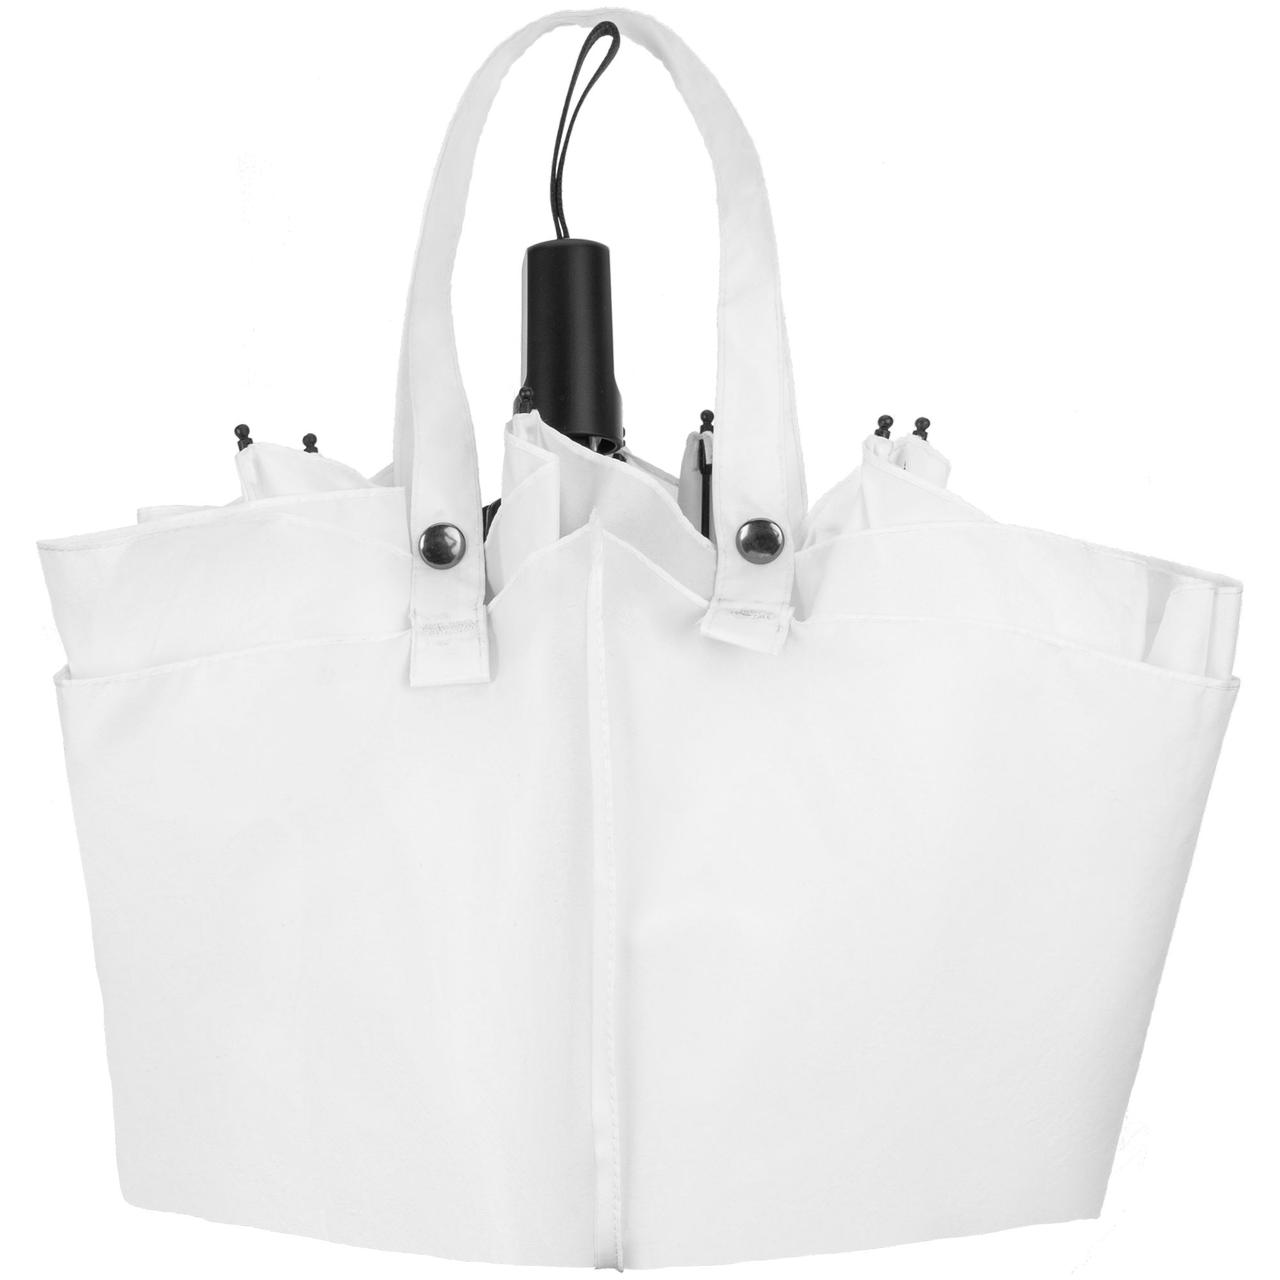 Зонт-сумка складной Stash, белый (артикул 10991.60), фото 1